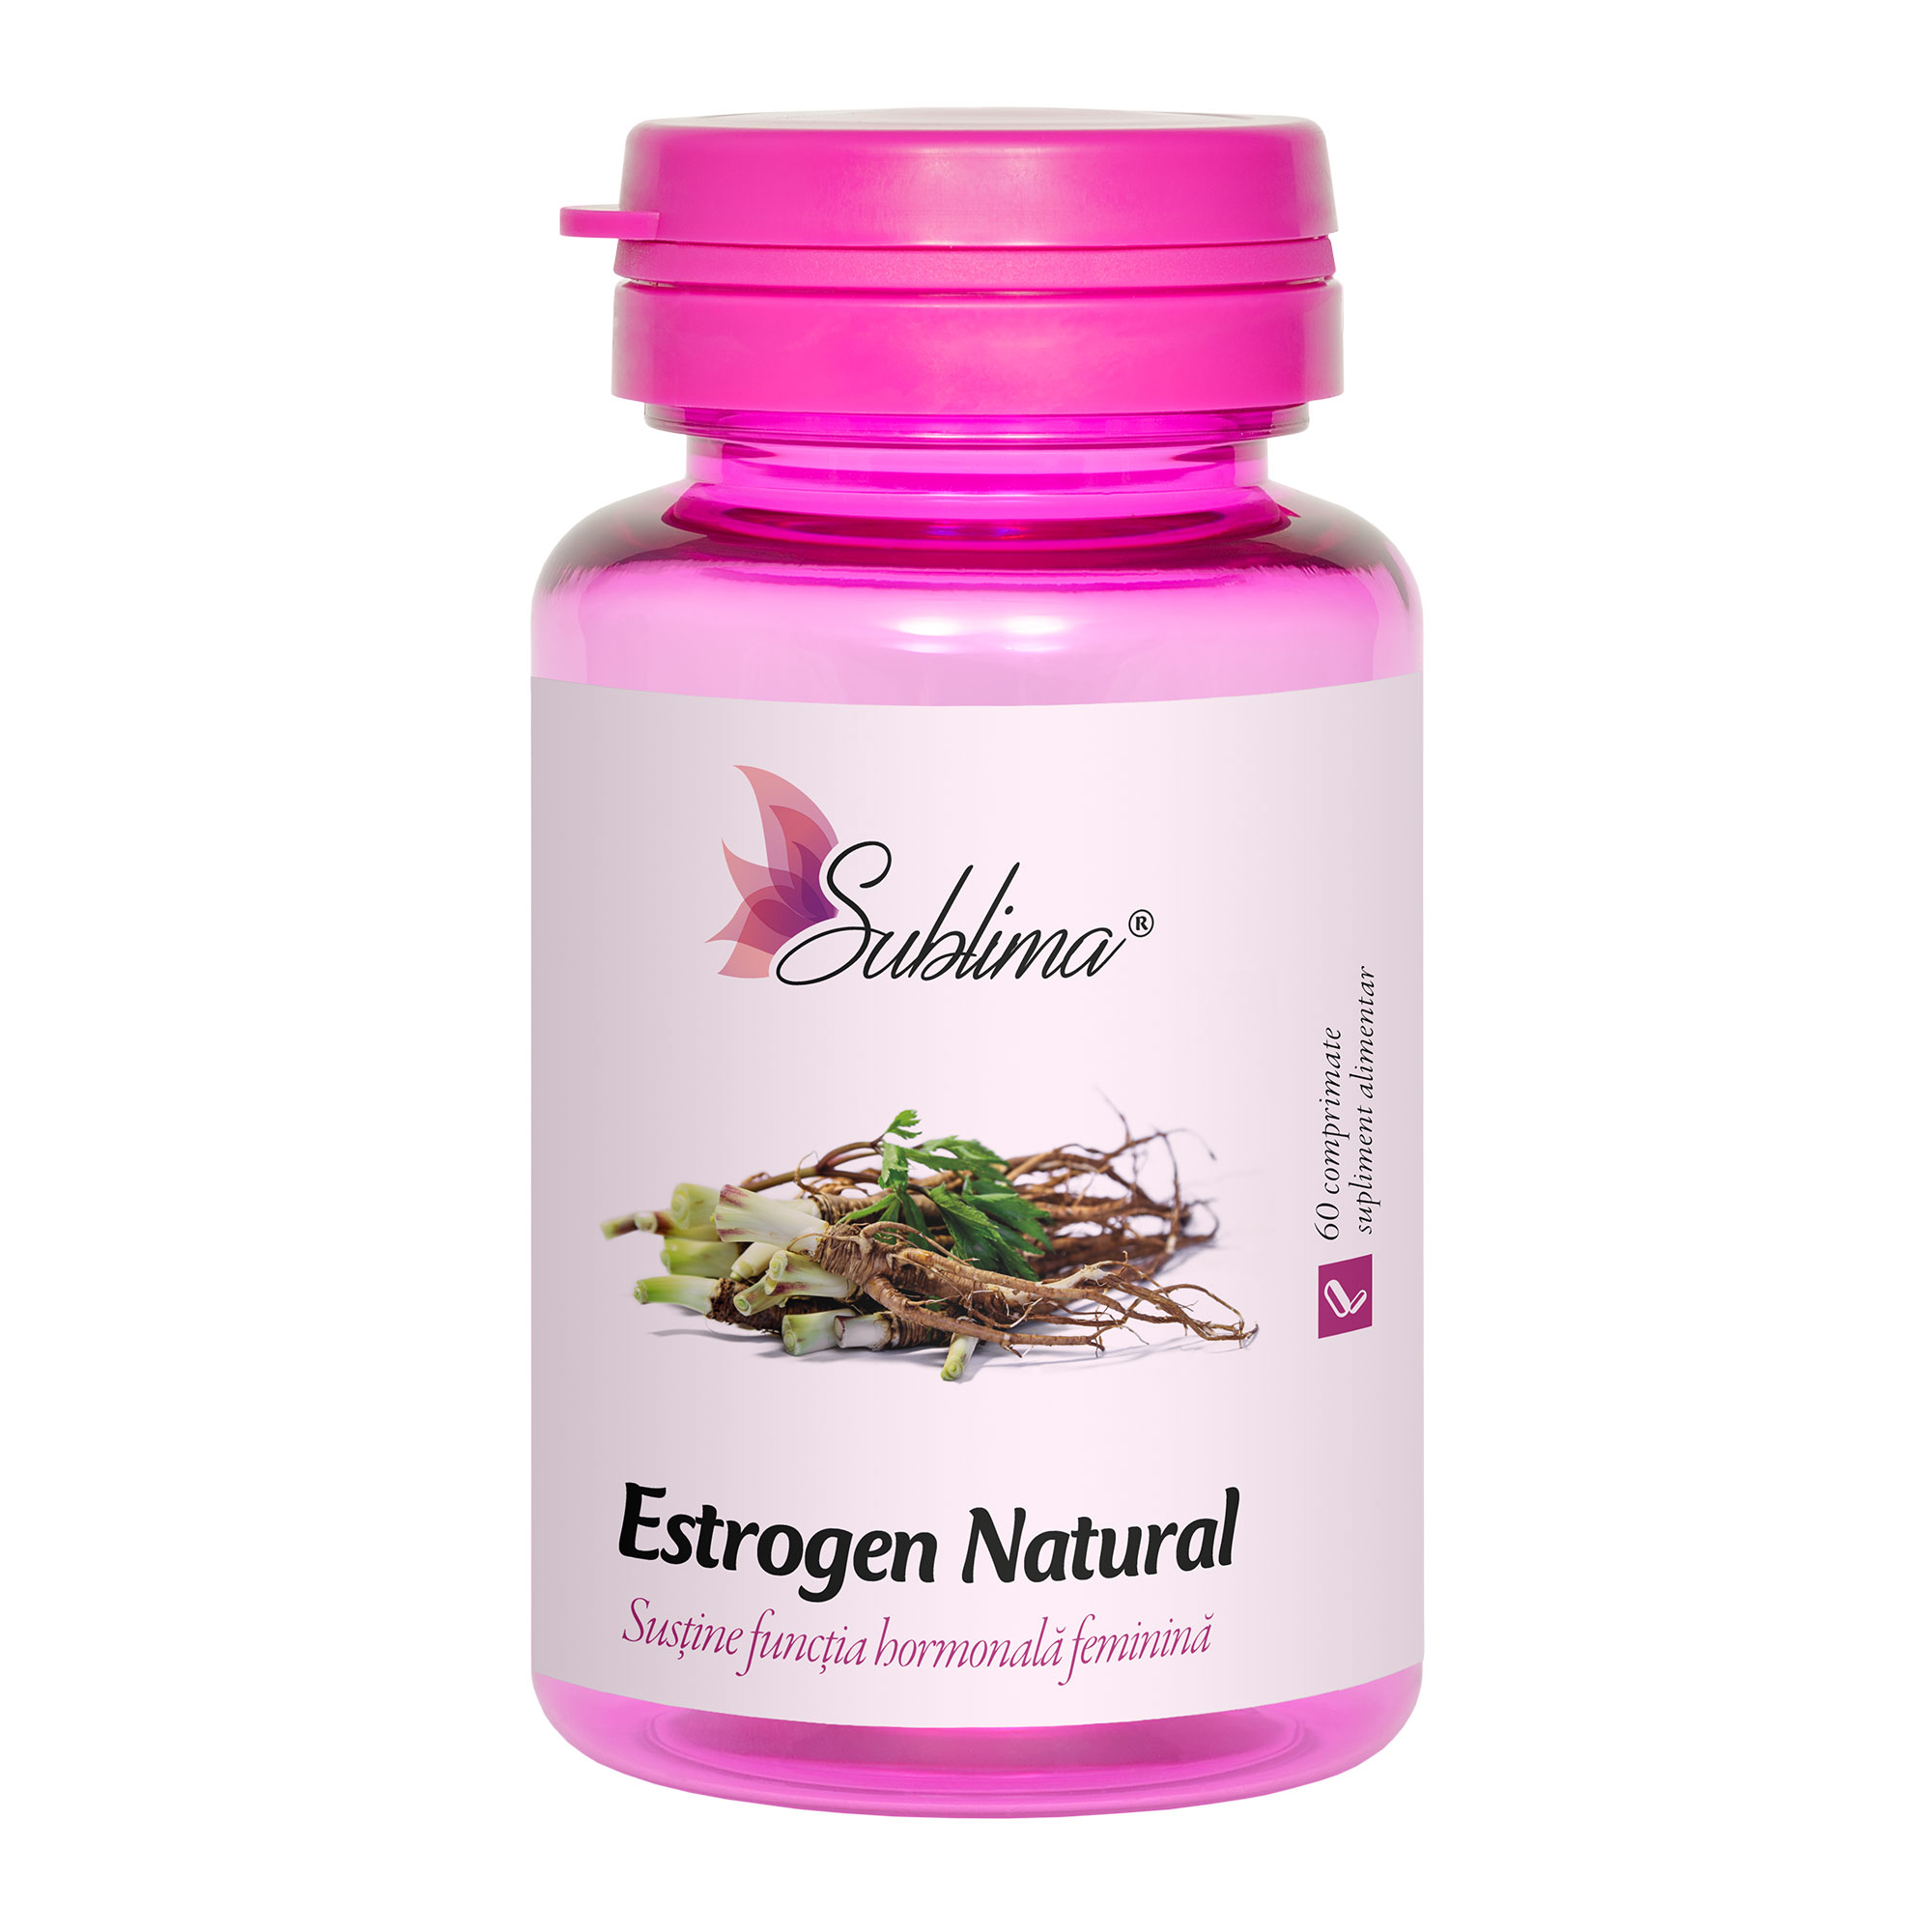 Sublima Estrogen Natural comprimate daciaplant.ro